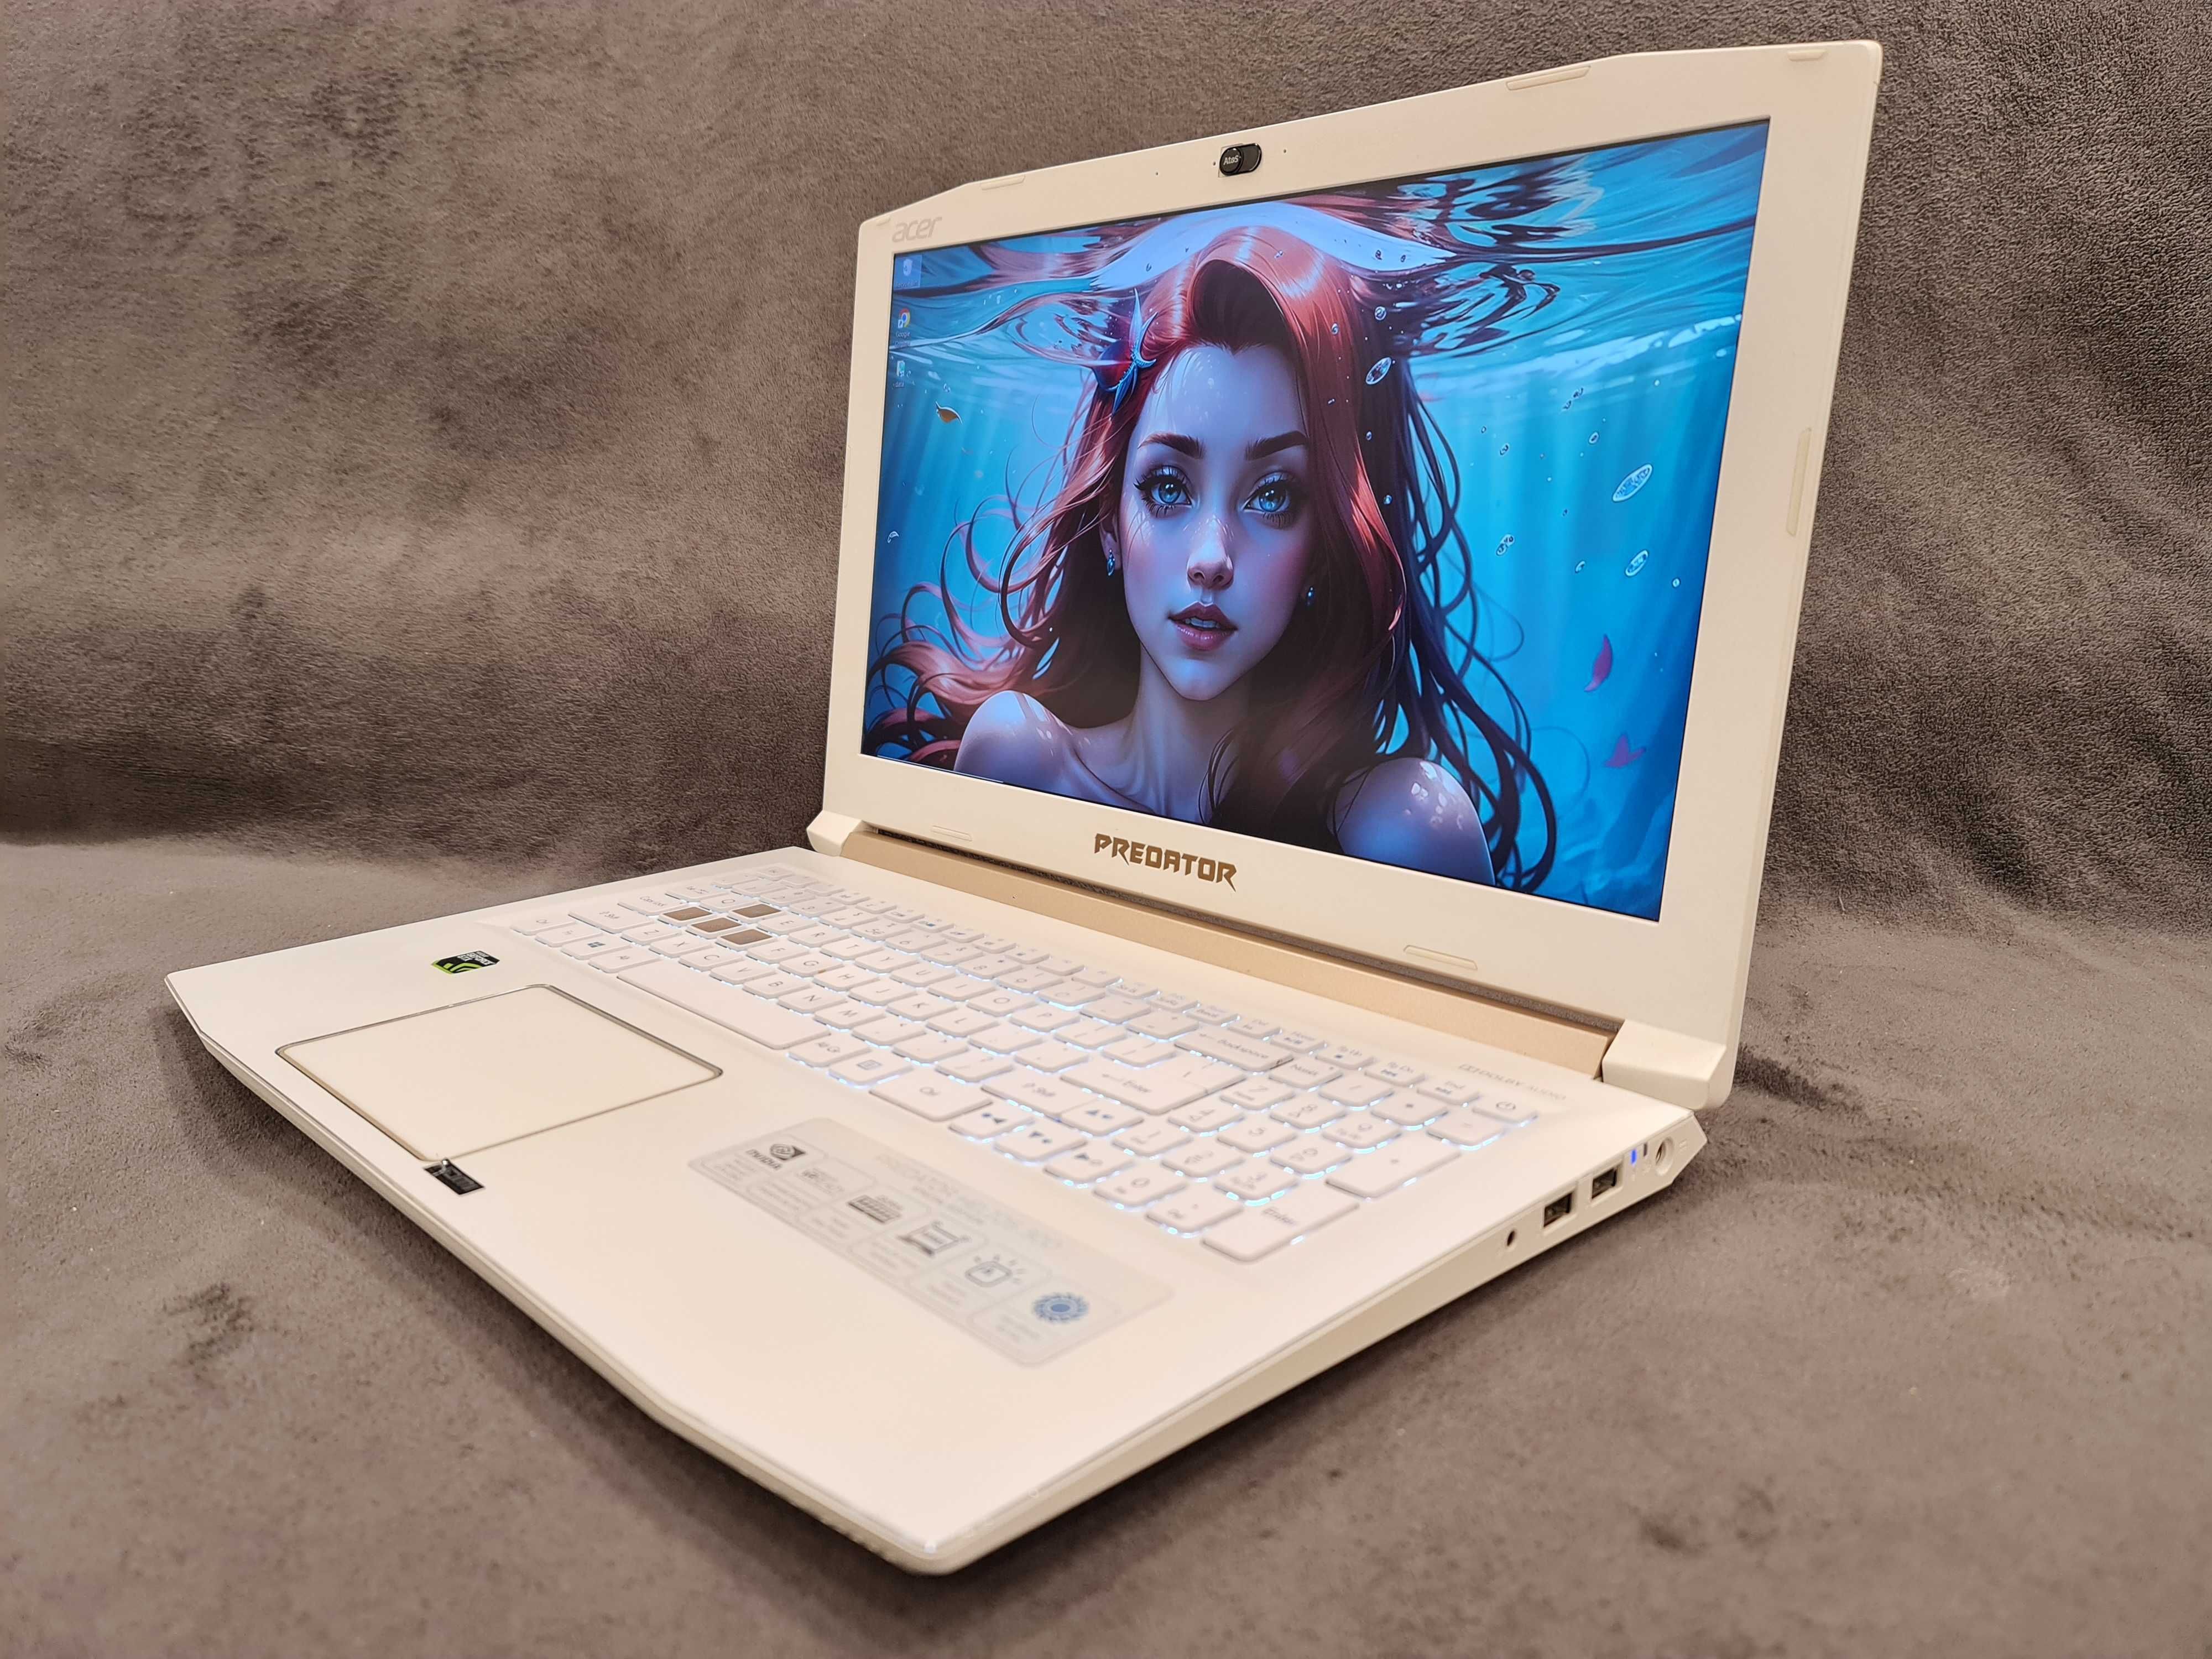 laptop Acer Predator nou ,video 6 GB GTX 1060, ram 16 gb (model rar)